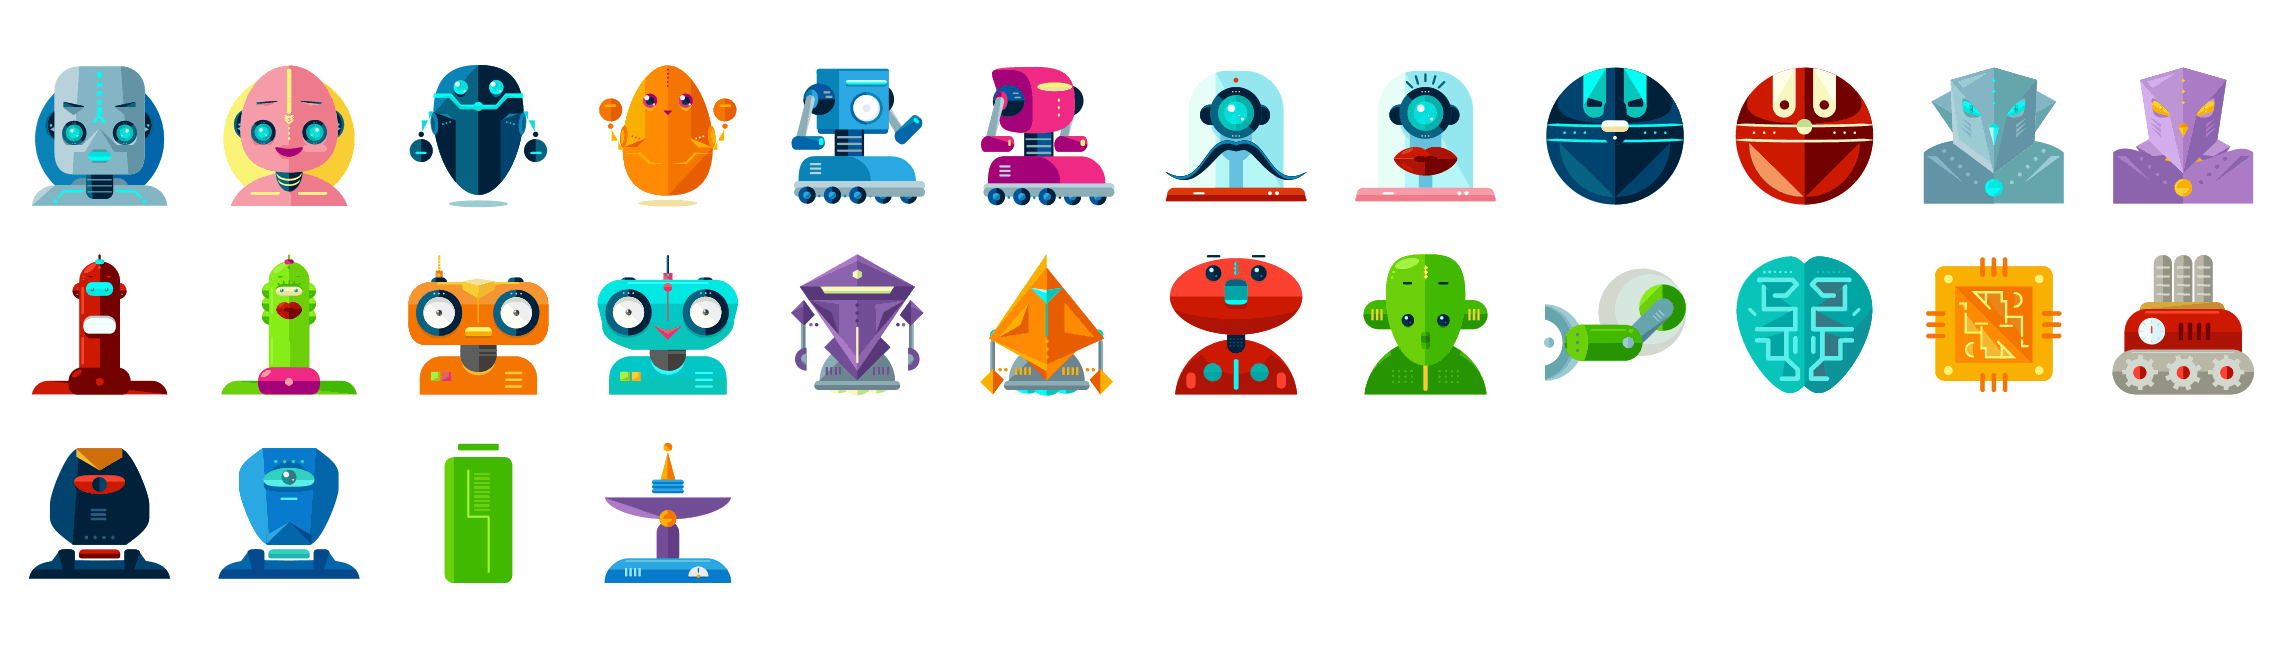 Robots-flat-icons